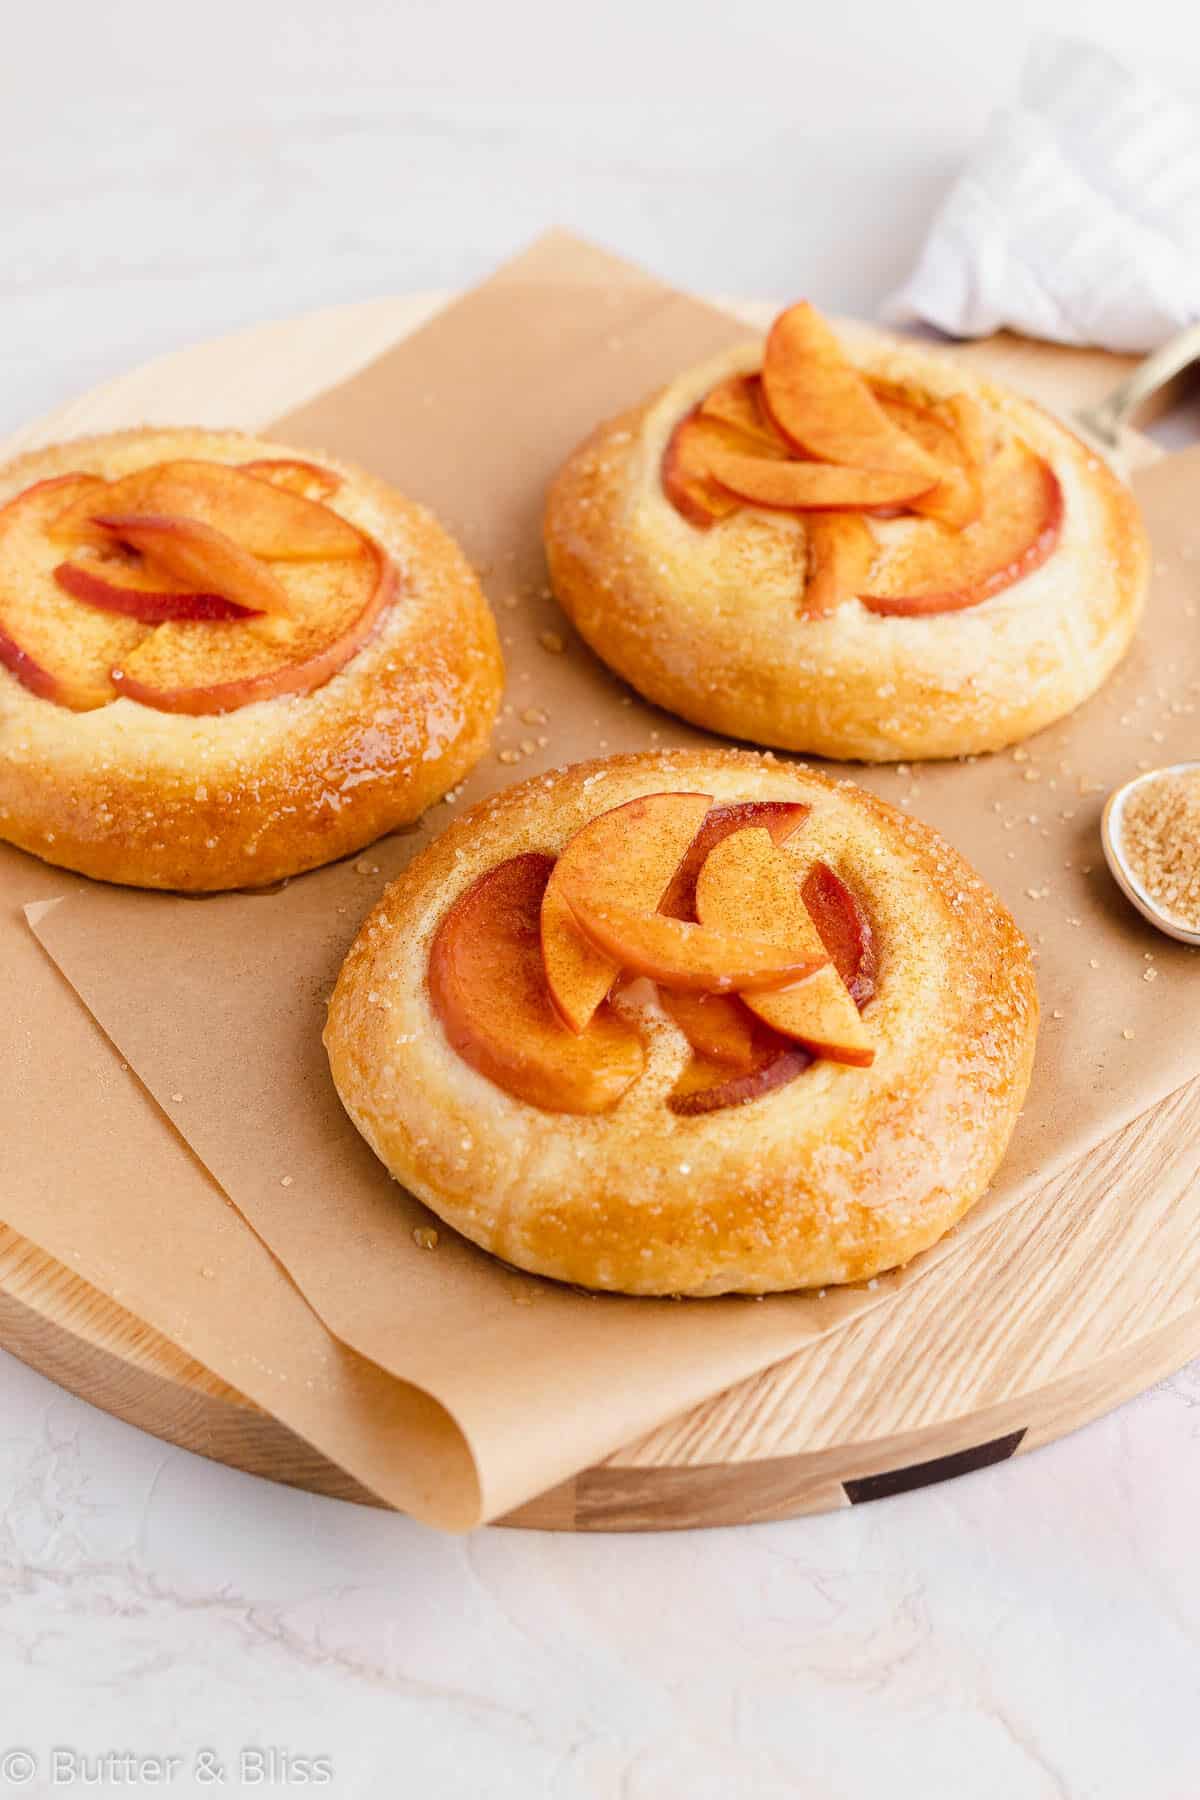 Peach kuchen arranged on a cutting board